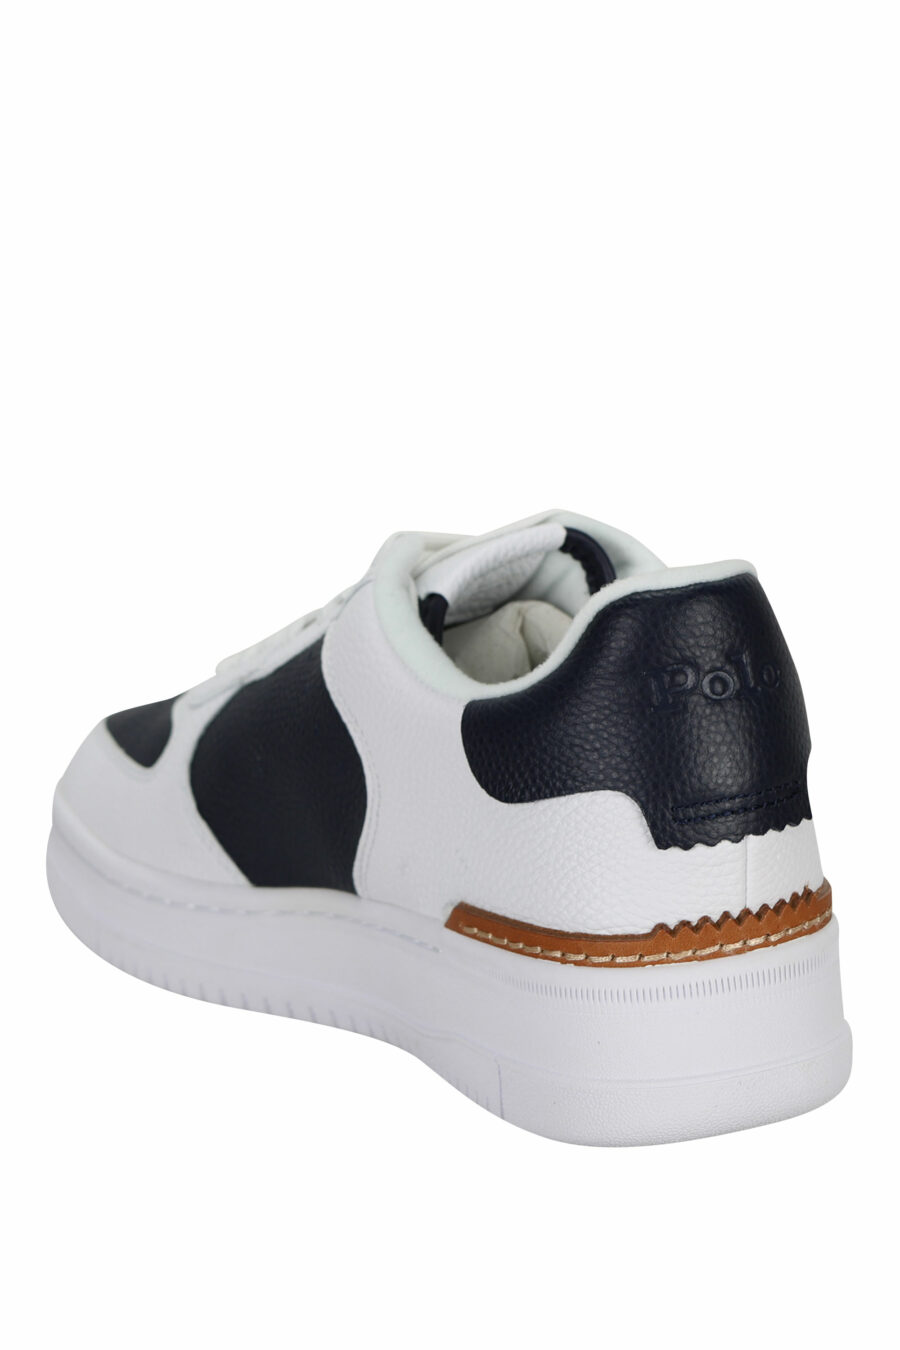 White trainers with dark blue and white mini-logo "polo" - 361653535530096 3